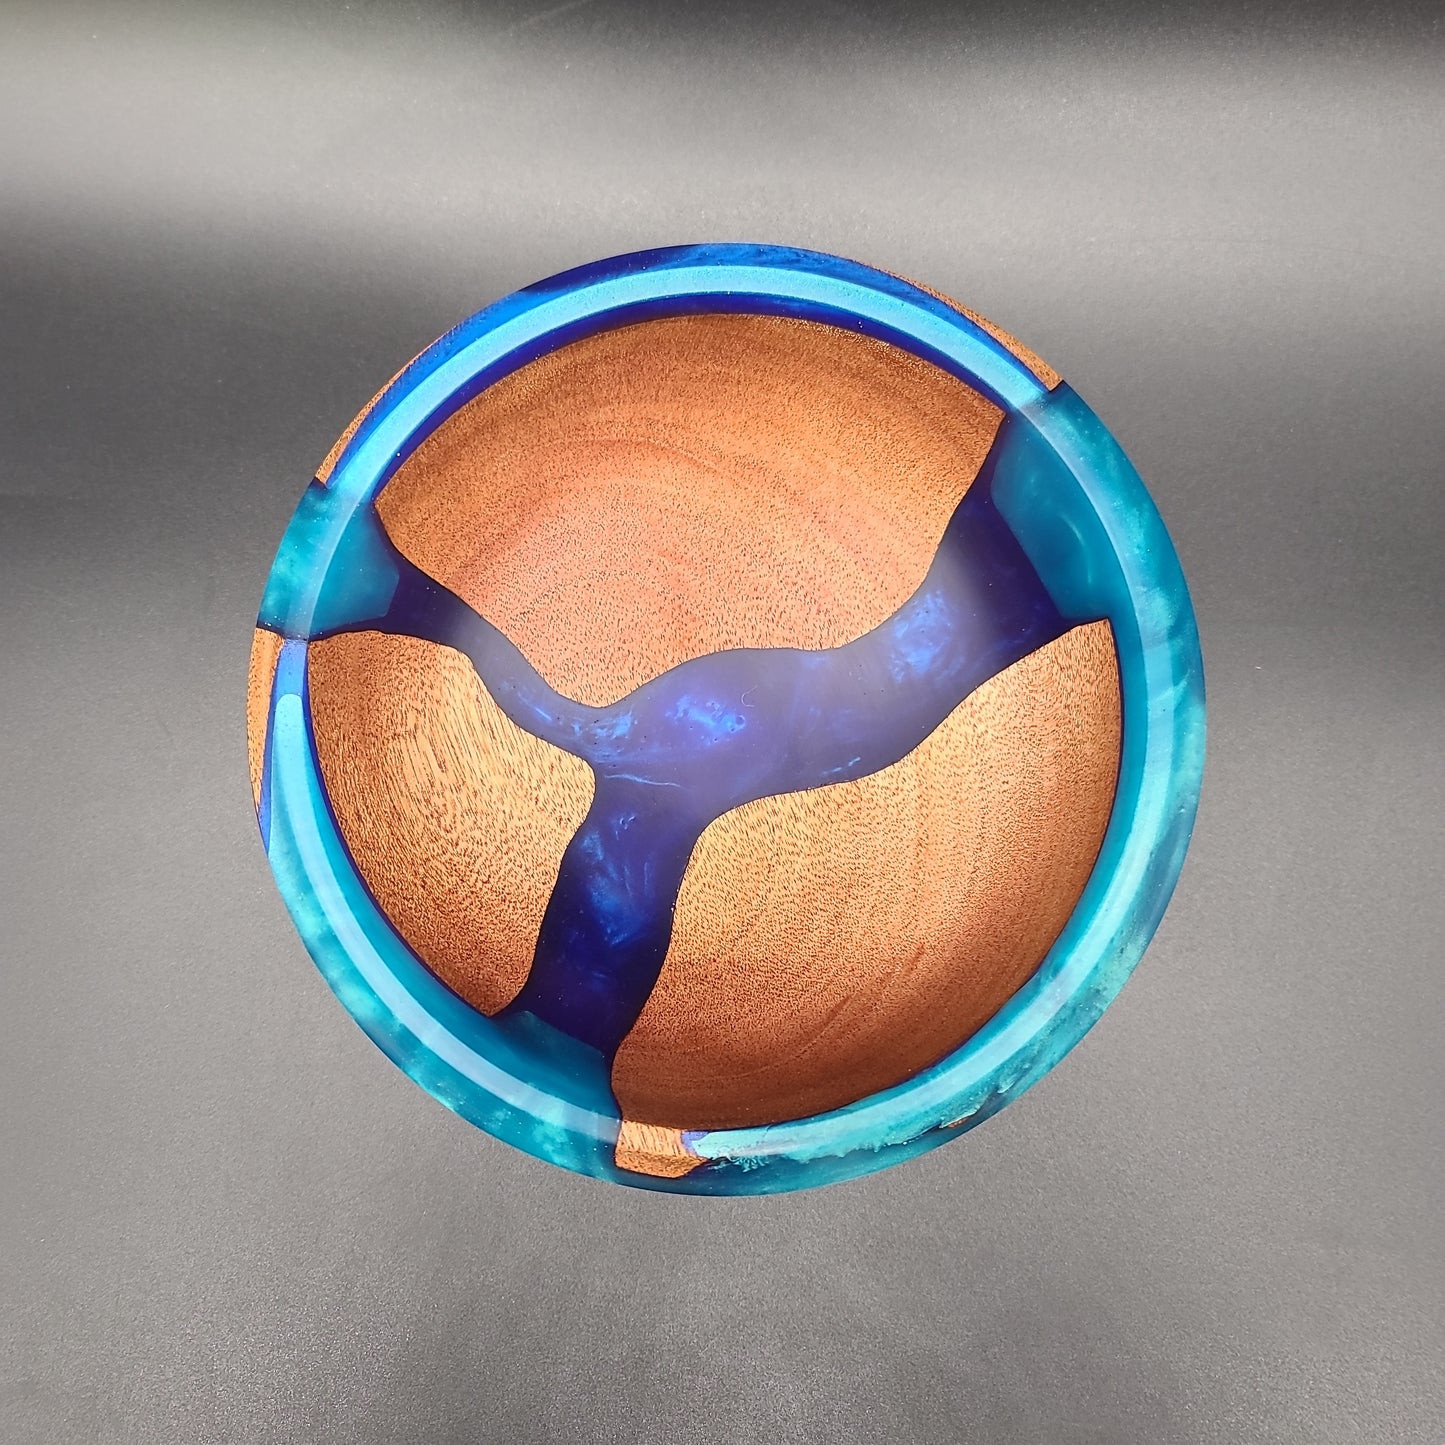 Khaya (African Mahogany) Bowl with Multi-Blue Epoxy